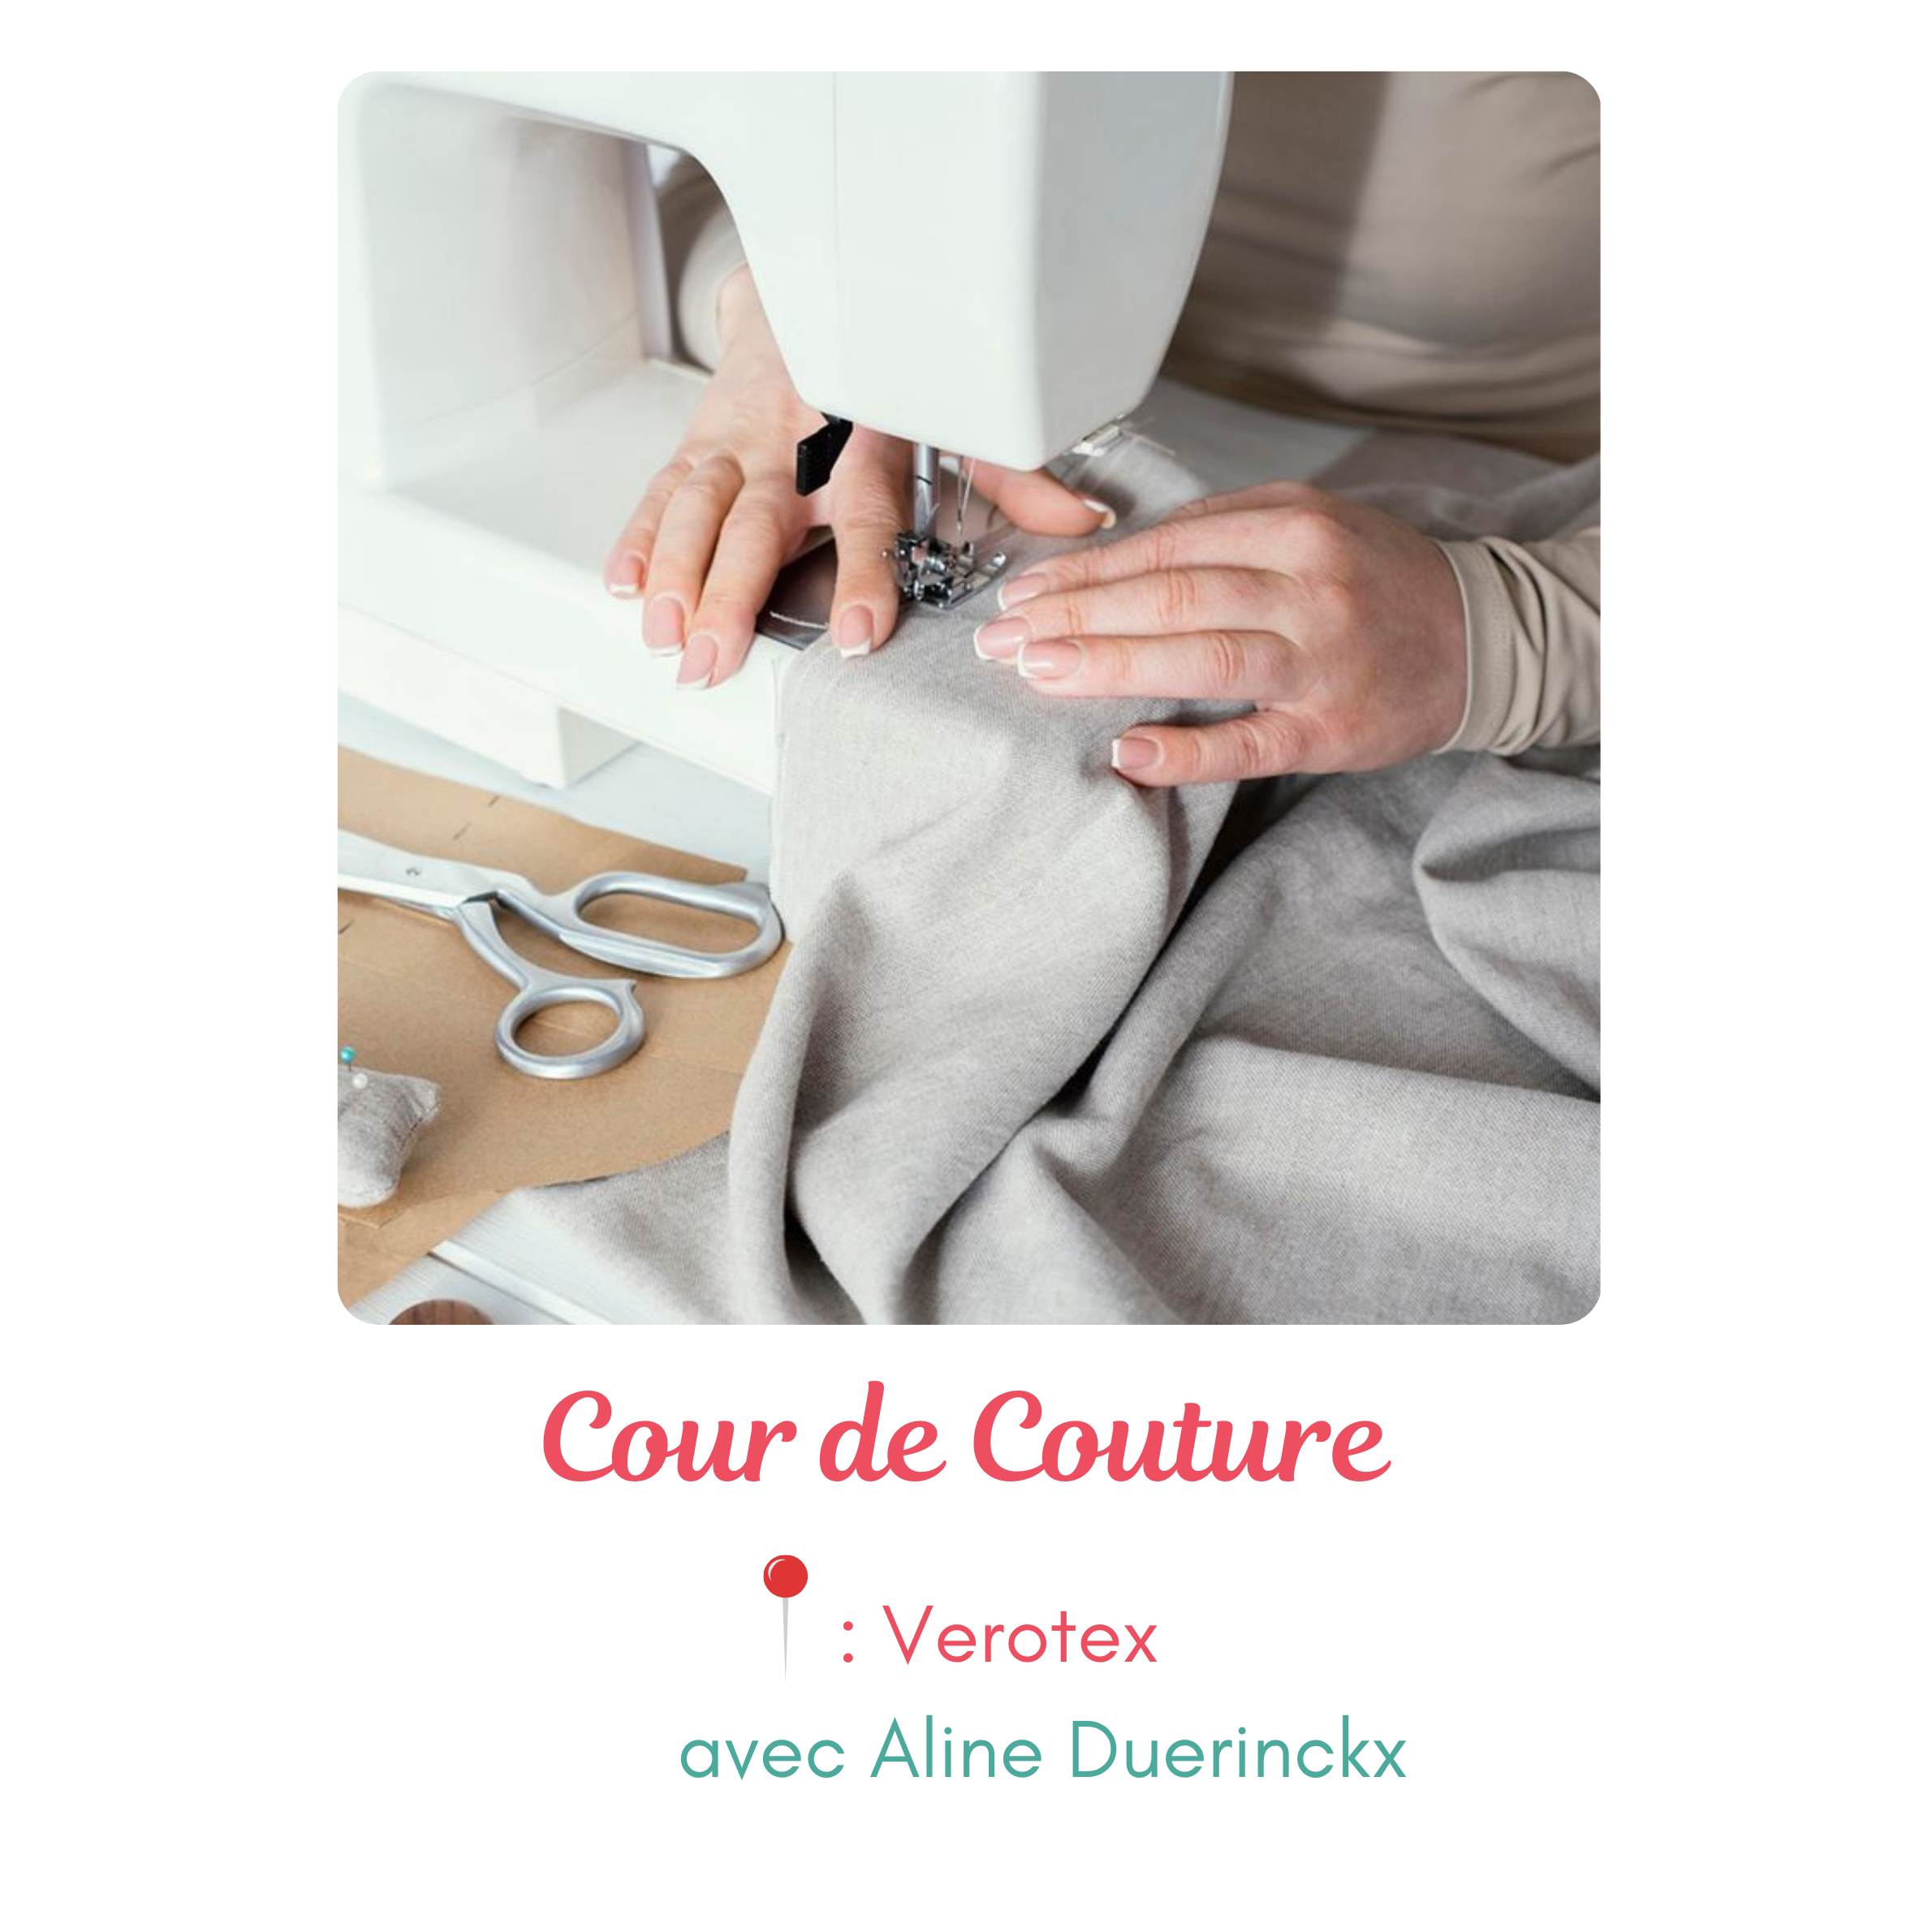 Ateliers de Couture avec Aline Duerinckx chez Verotex